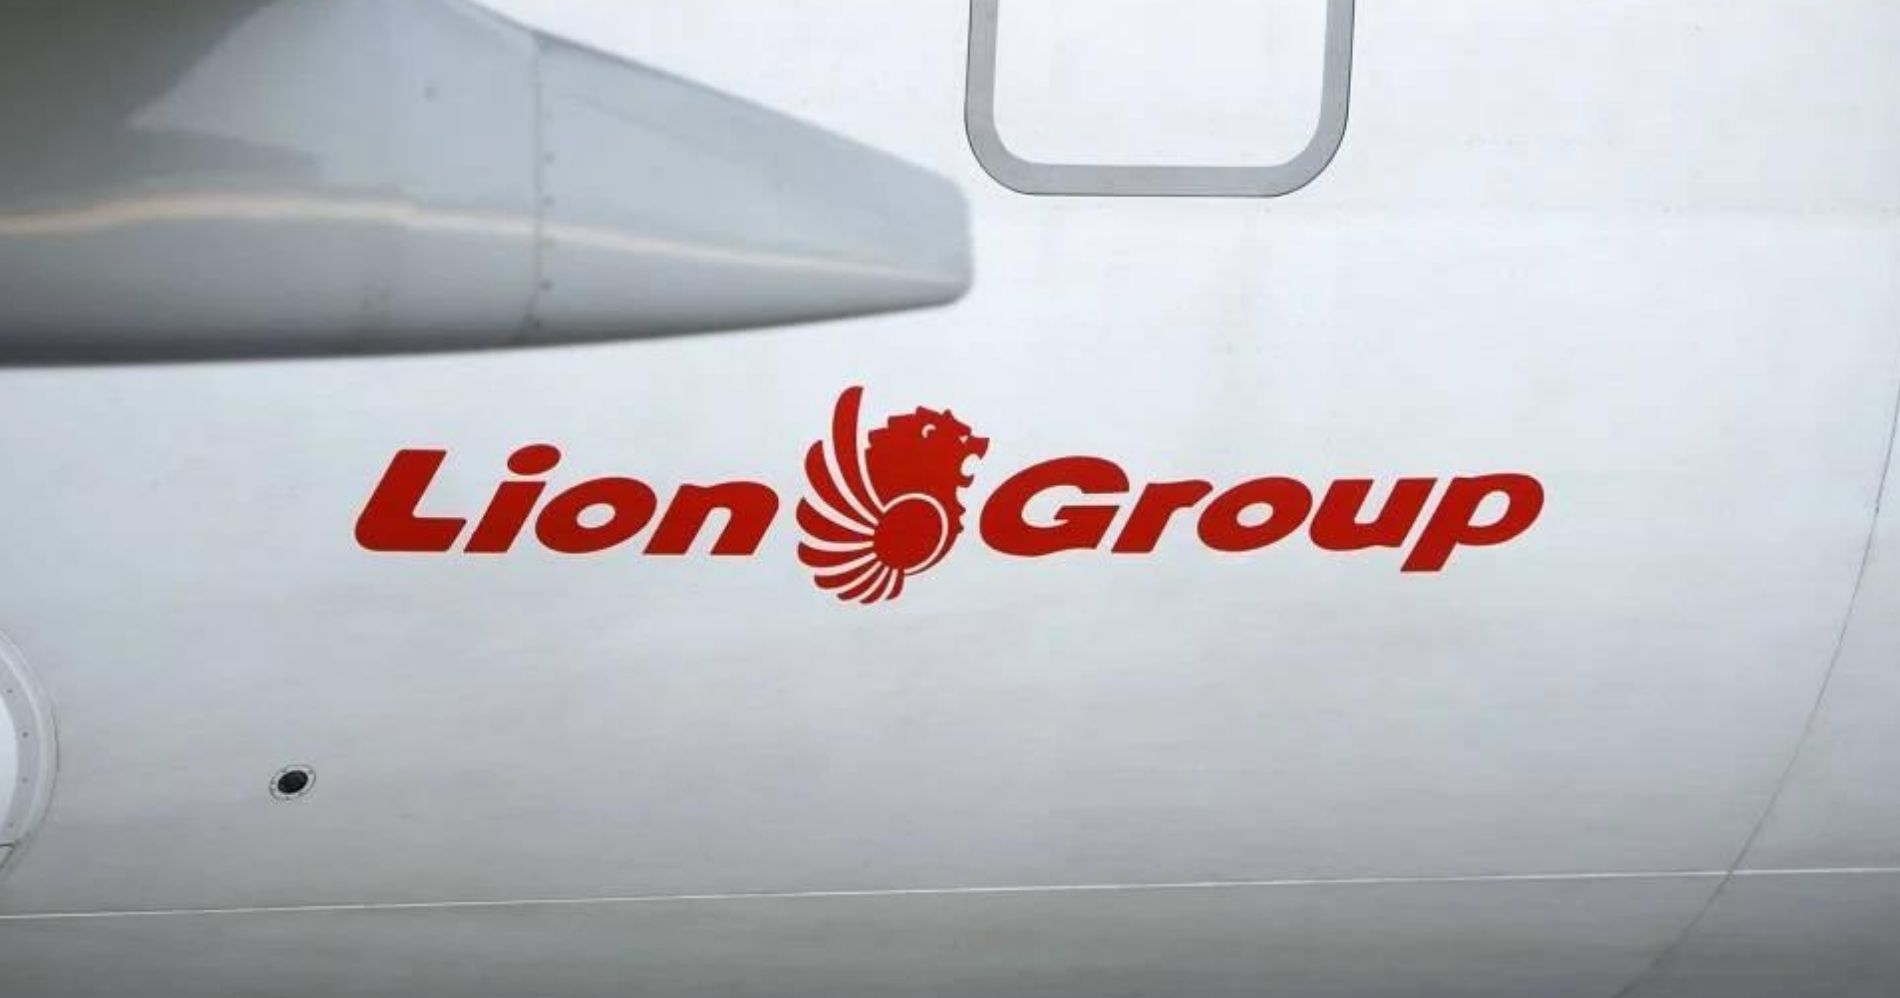 Pemilik Lion Air Group Danai Super Air Jet Illustration Bisnis Muda - Image: Lion Group